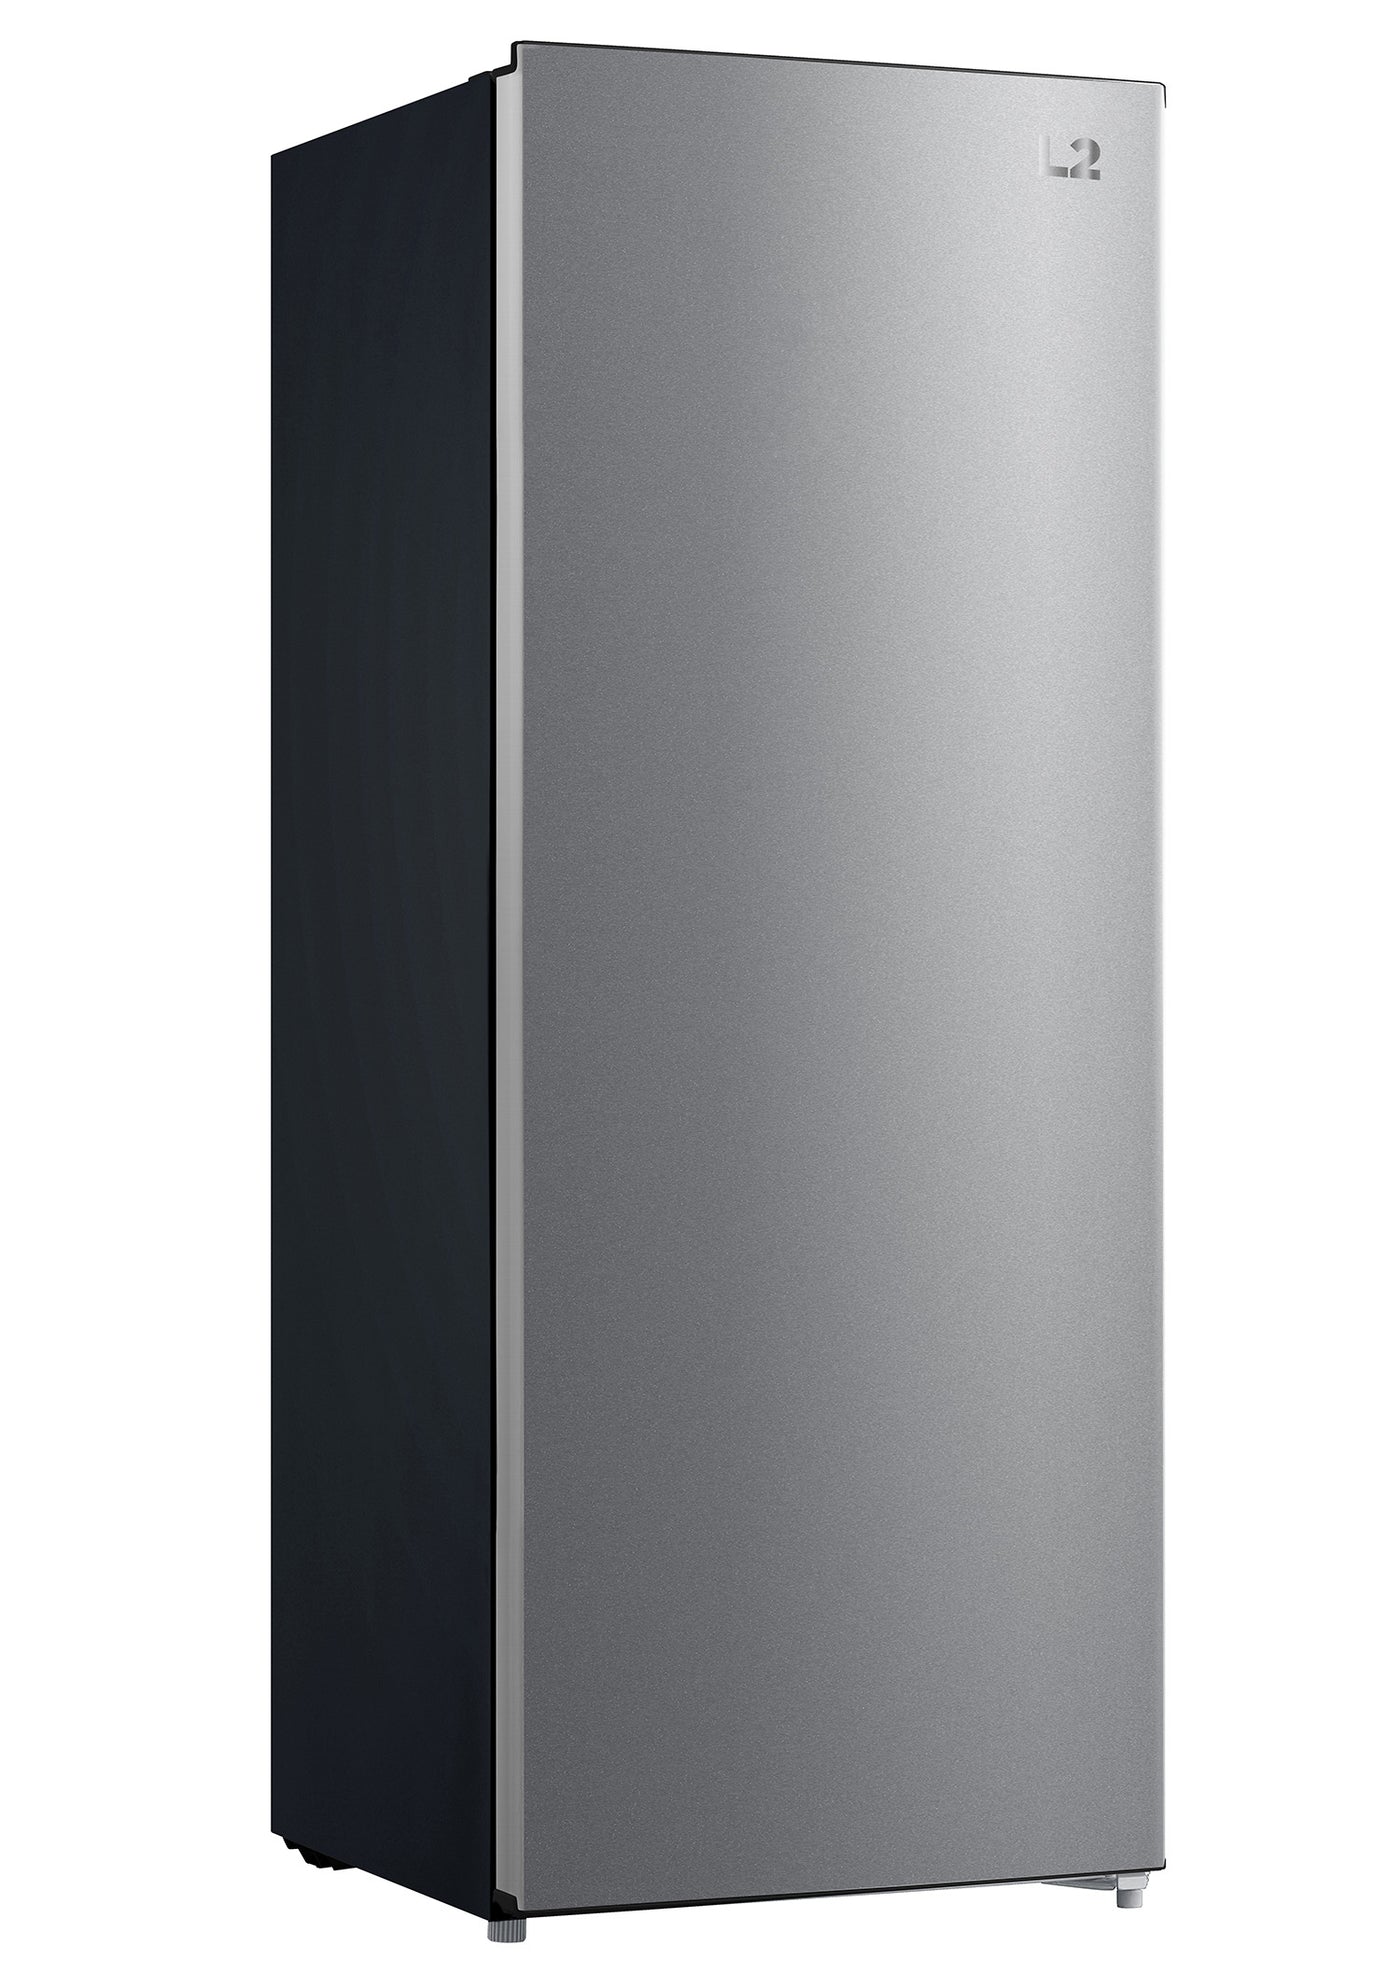 L2 Stainless Steel Upright Freezer and Convertible Fridge (6.9 Cu. Ft) - LRU07B3ASS